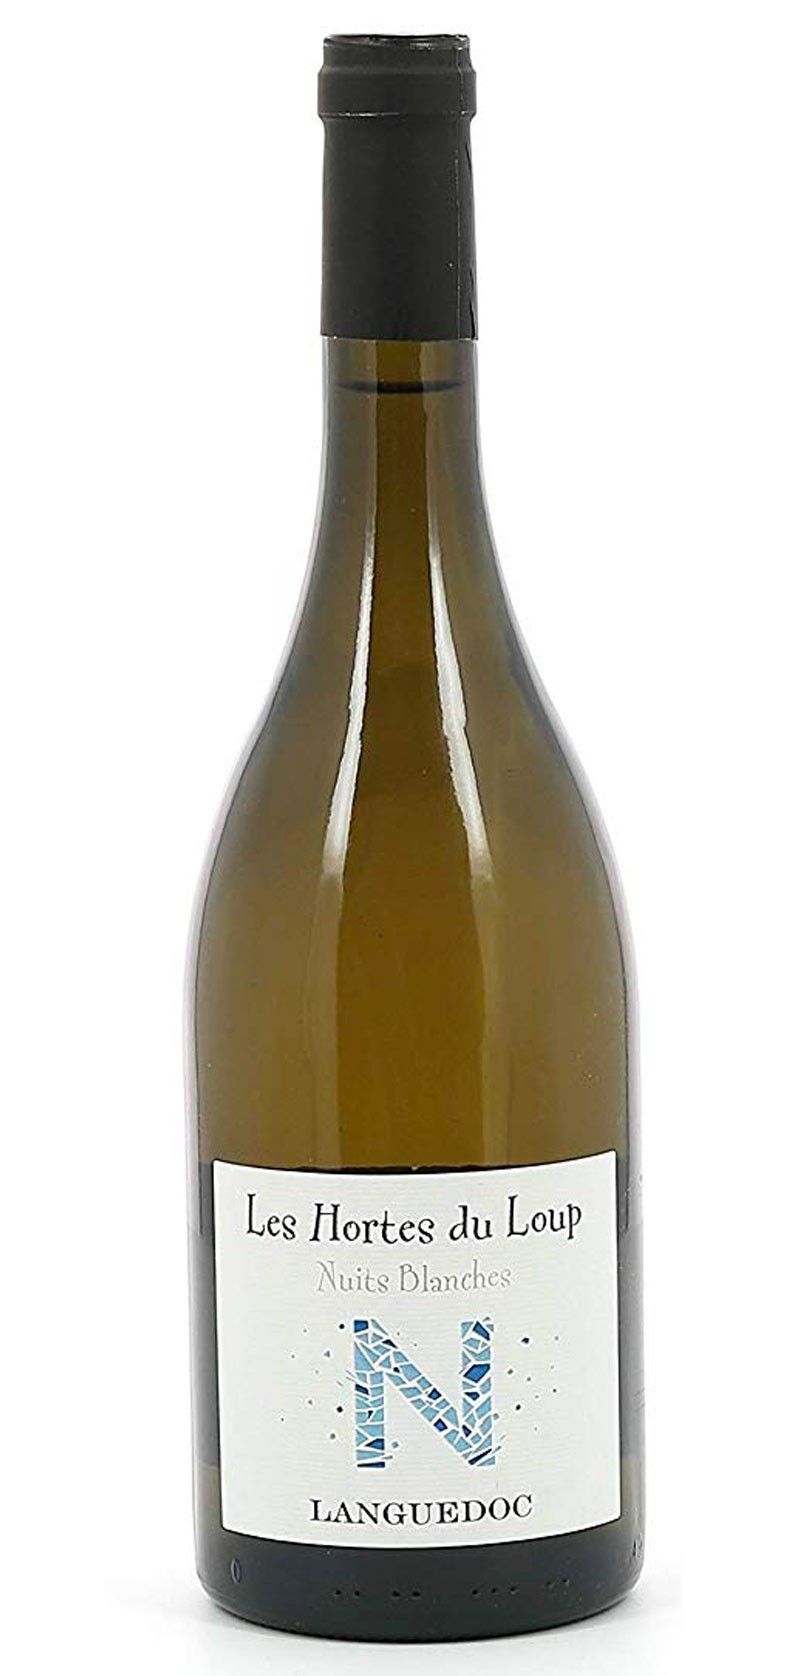 Les Hortes du Loup Nuits blanches Languedoc - White Wine